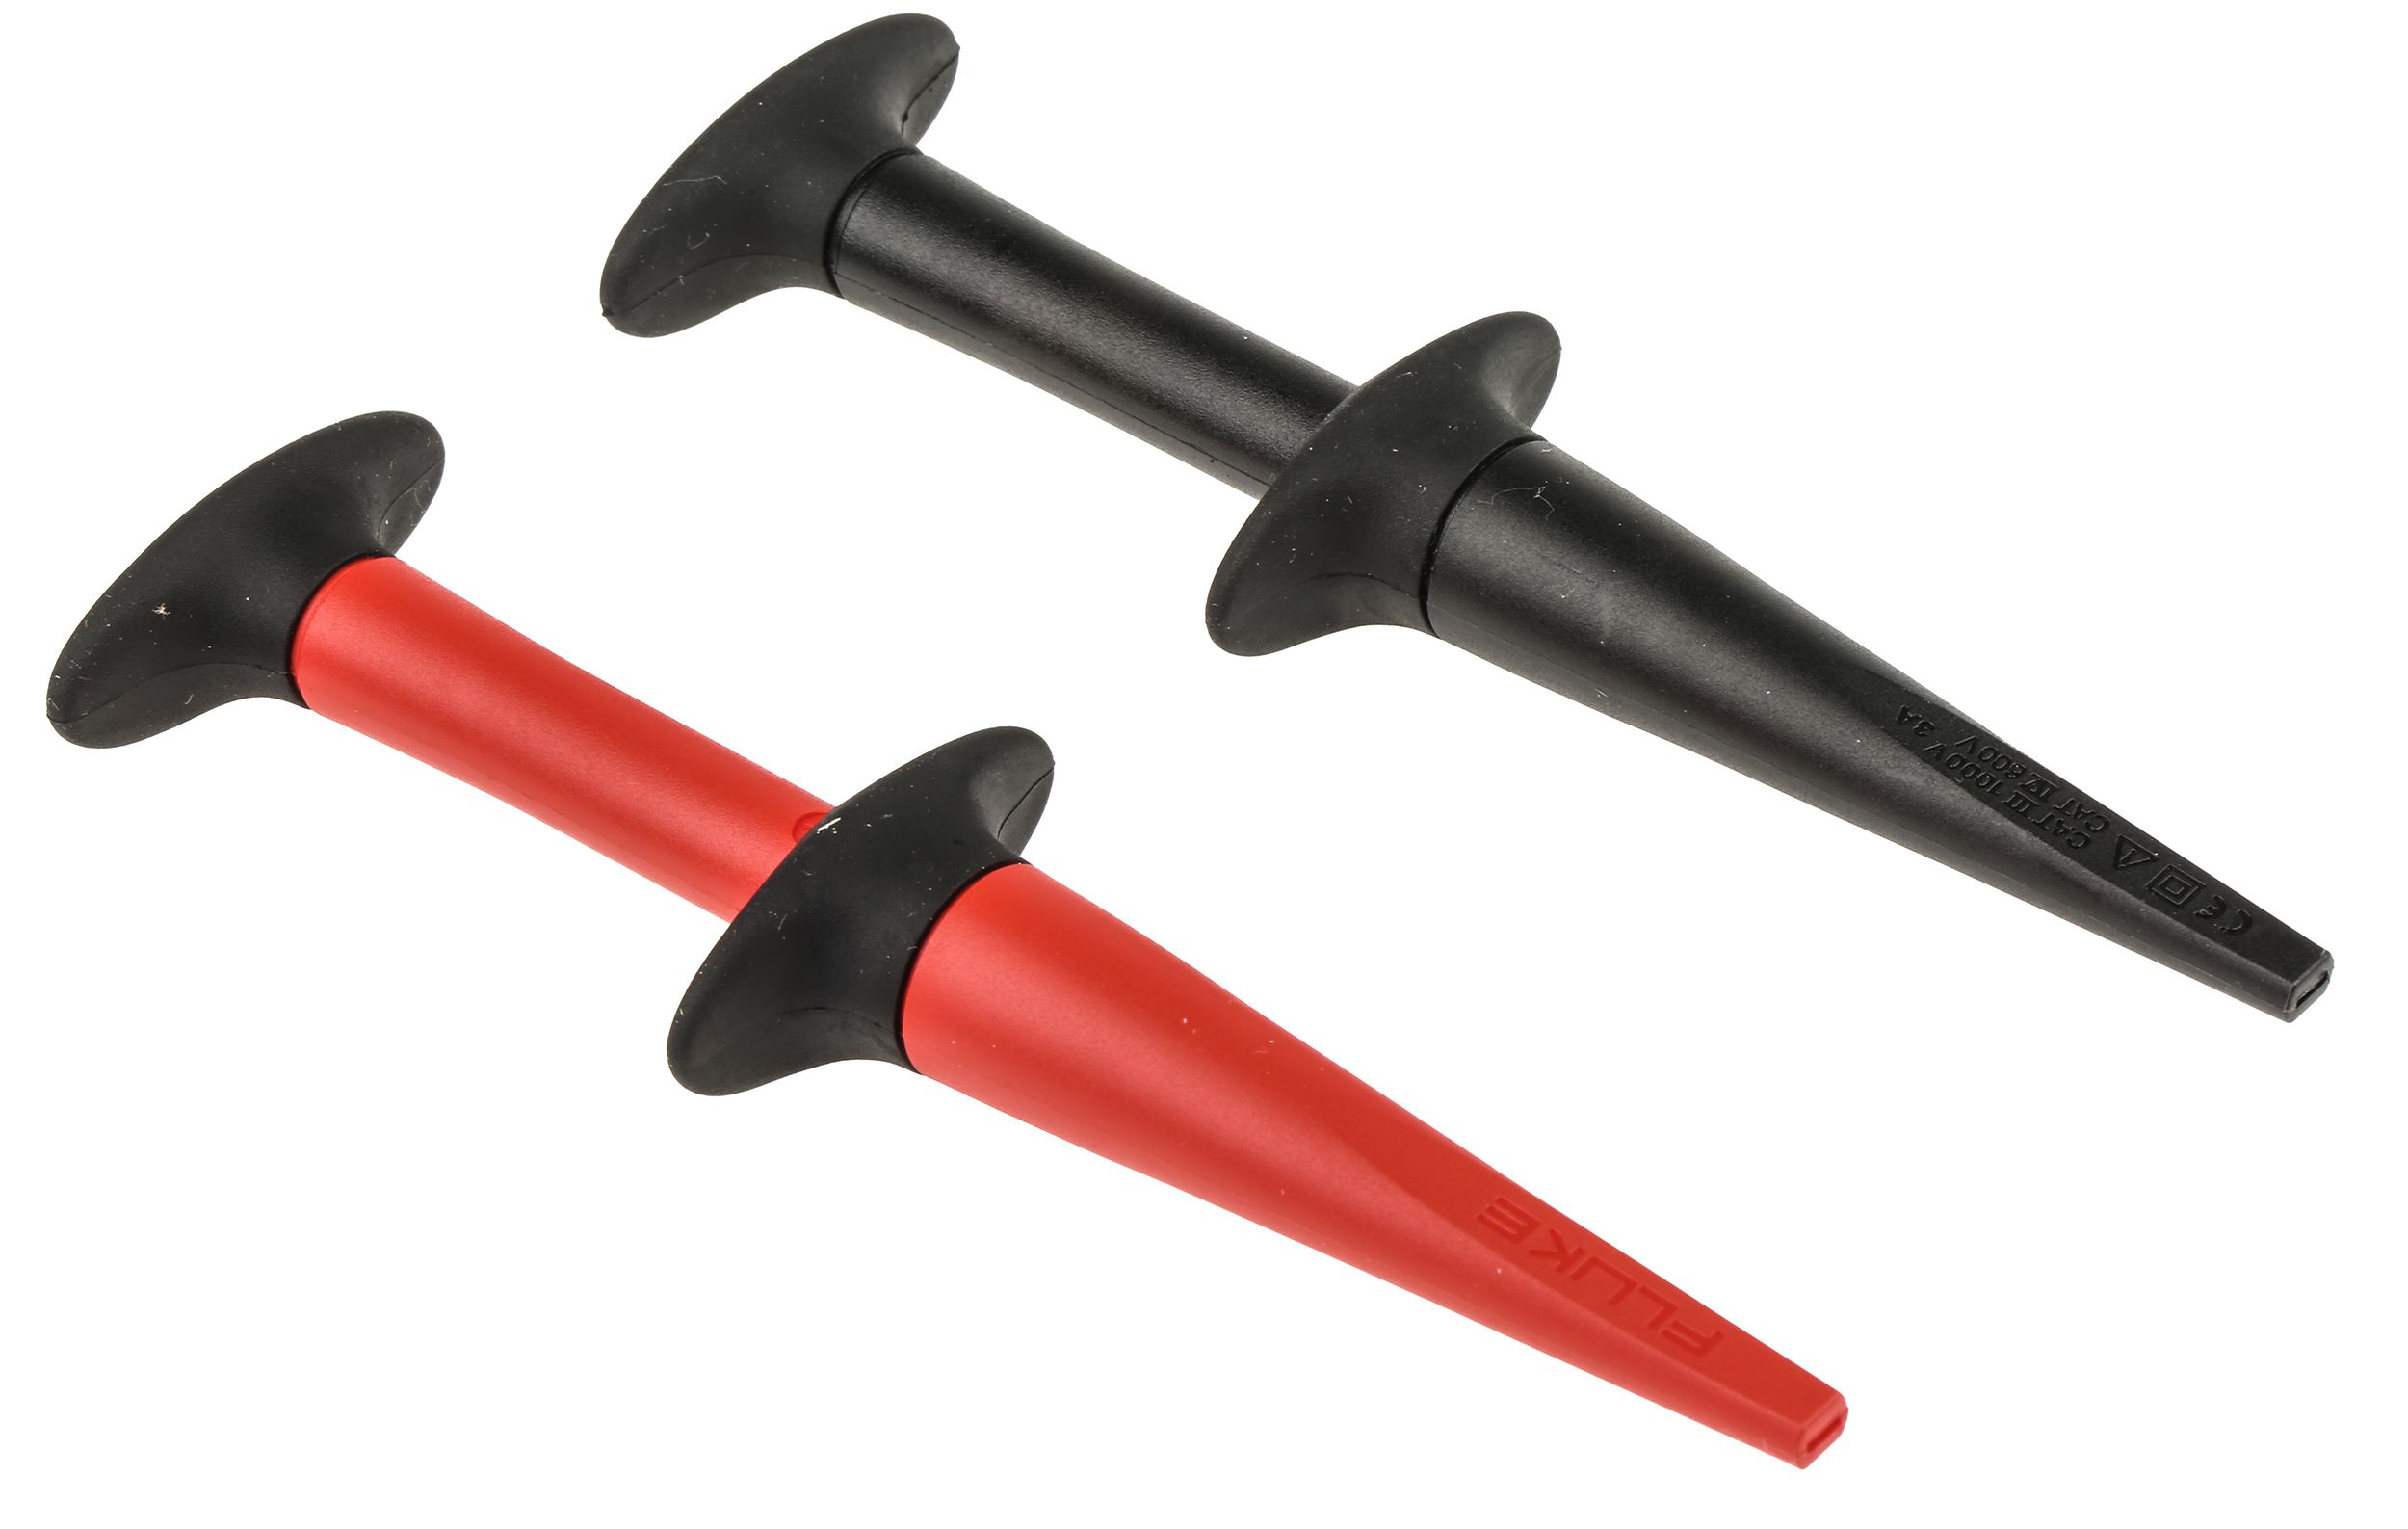 Fluke Red/Black Multimeter Leads, 3A Rating, 2mm Tip Size